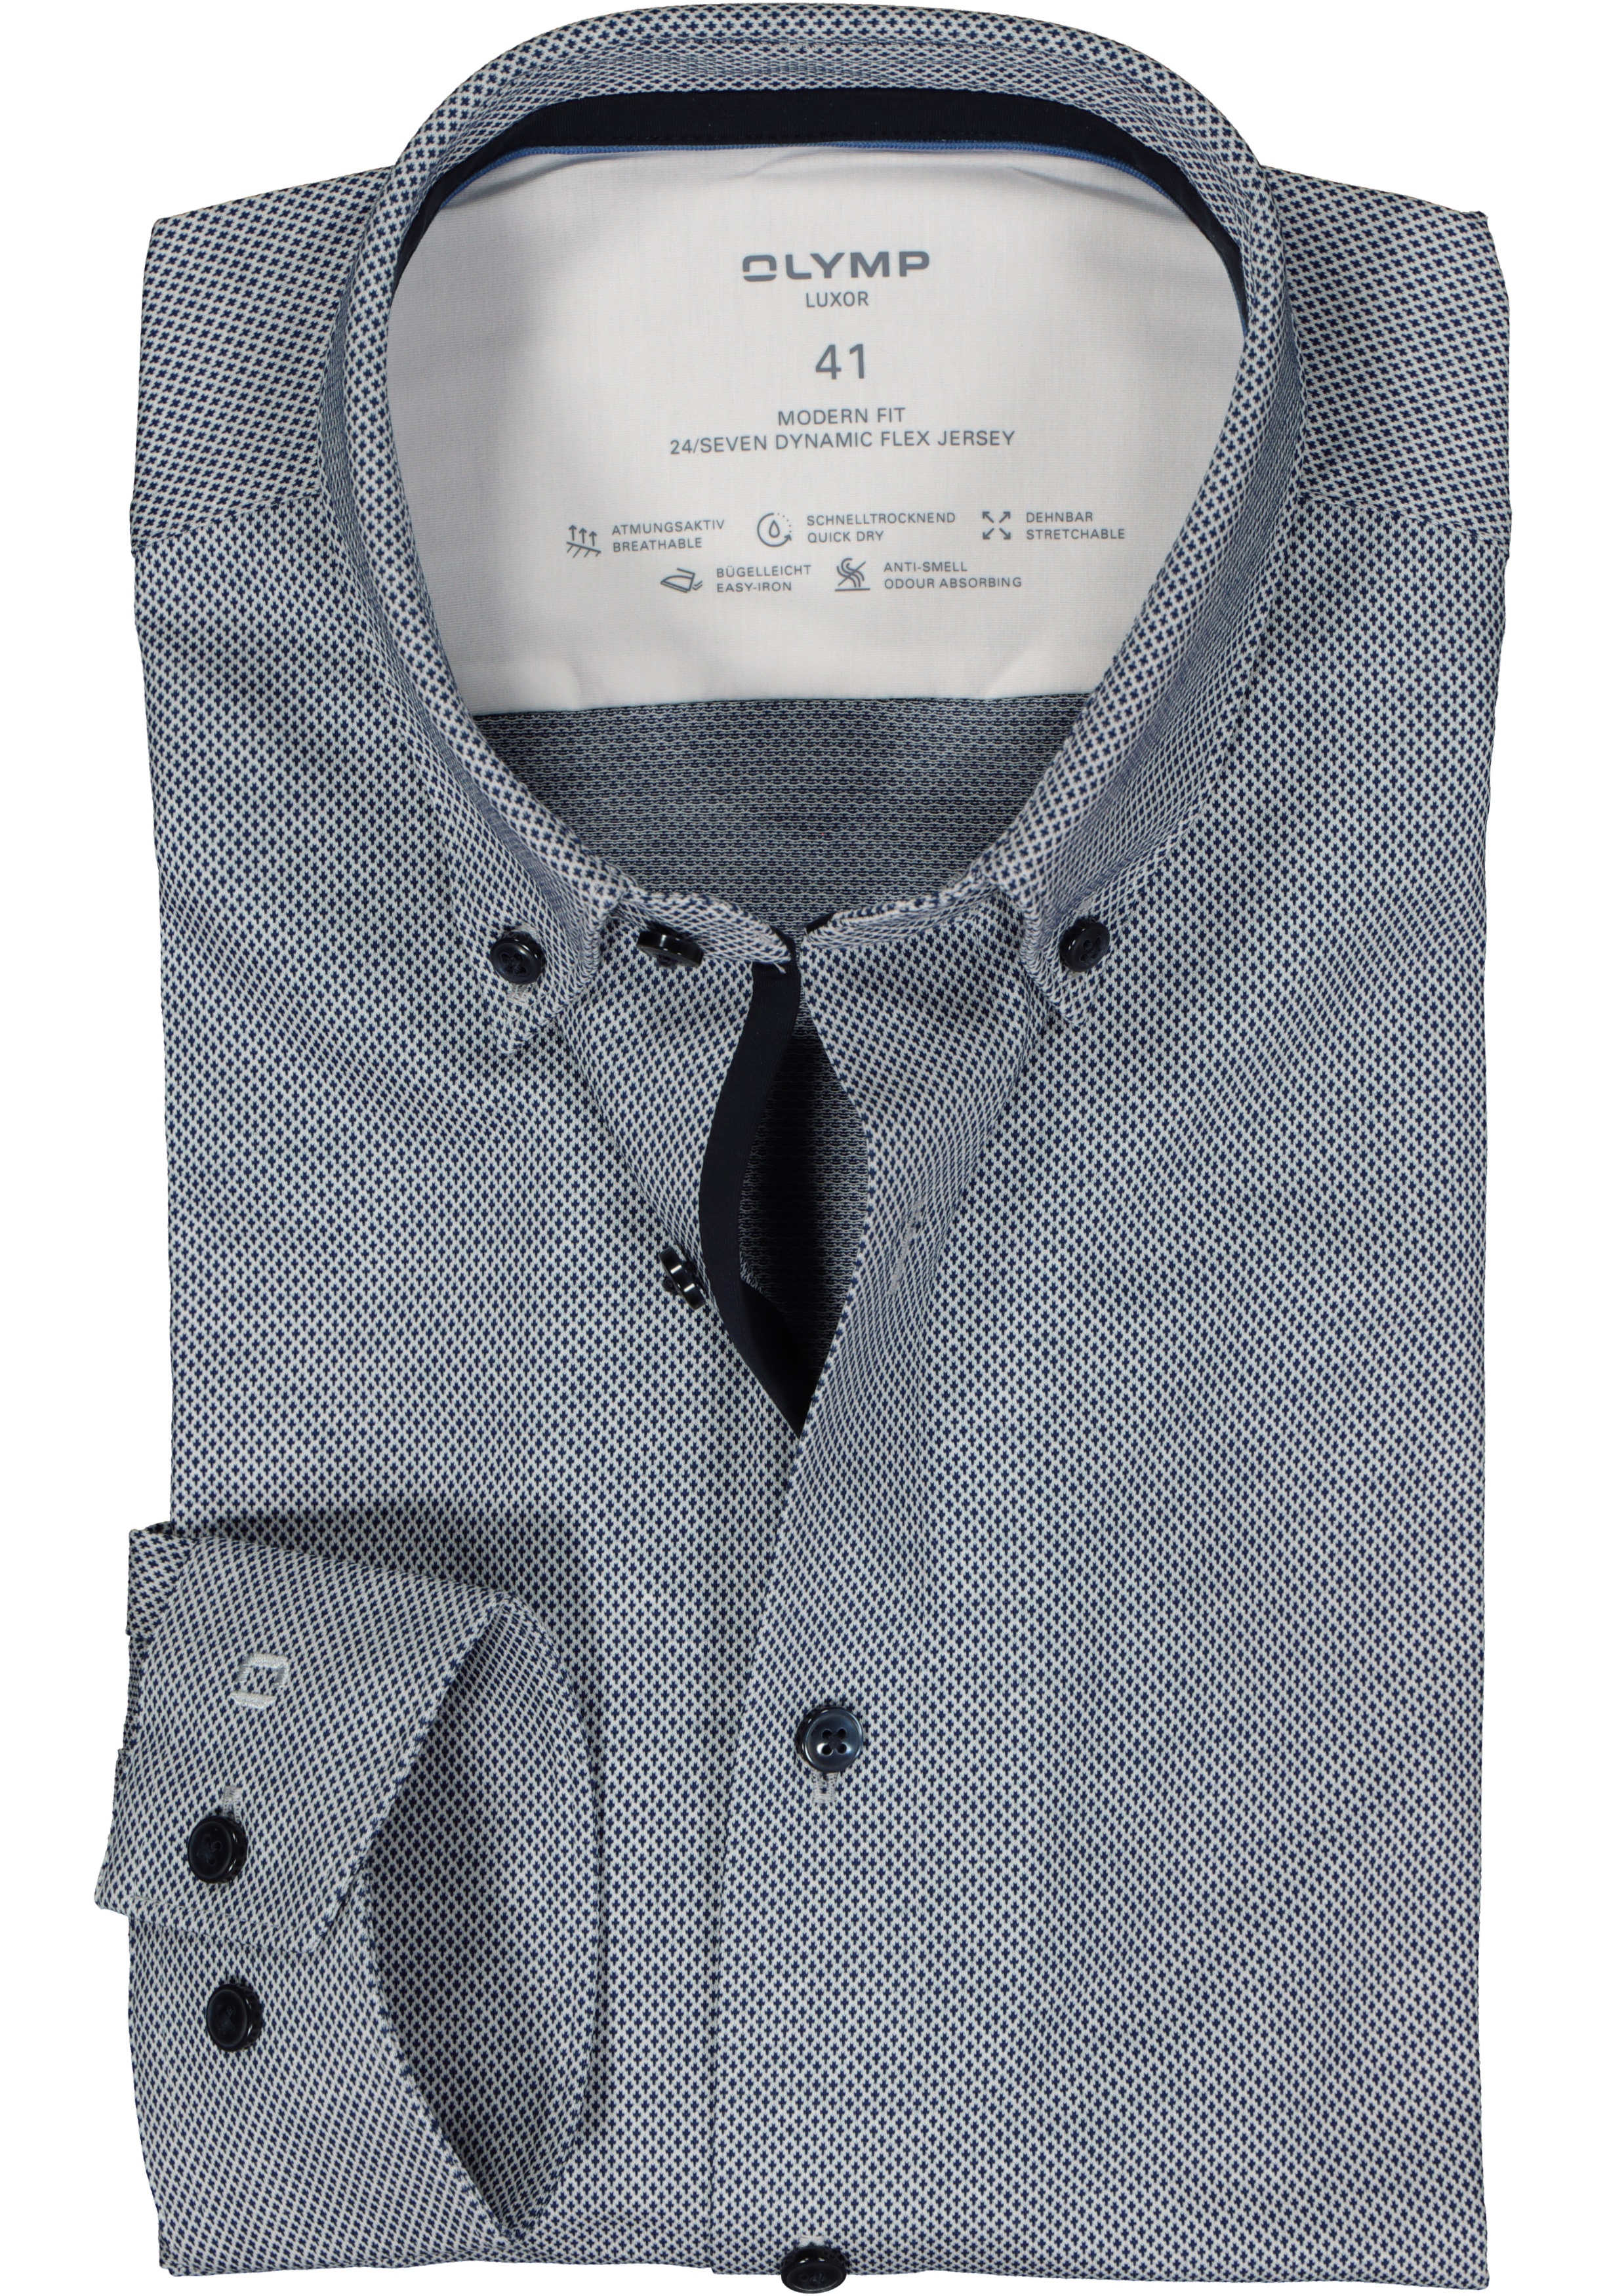 OLYMP 24/7 modern fit overhemd, tricot, donkerblauw met wit mini dessin